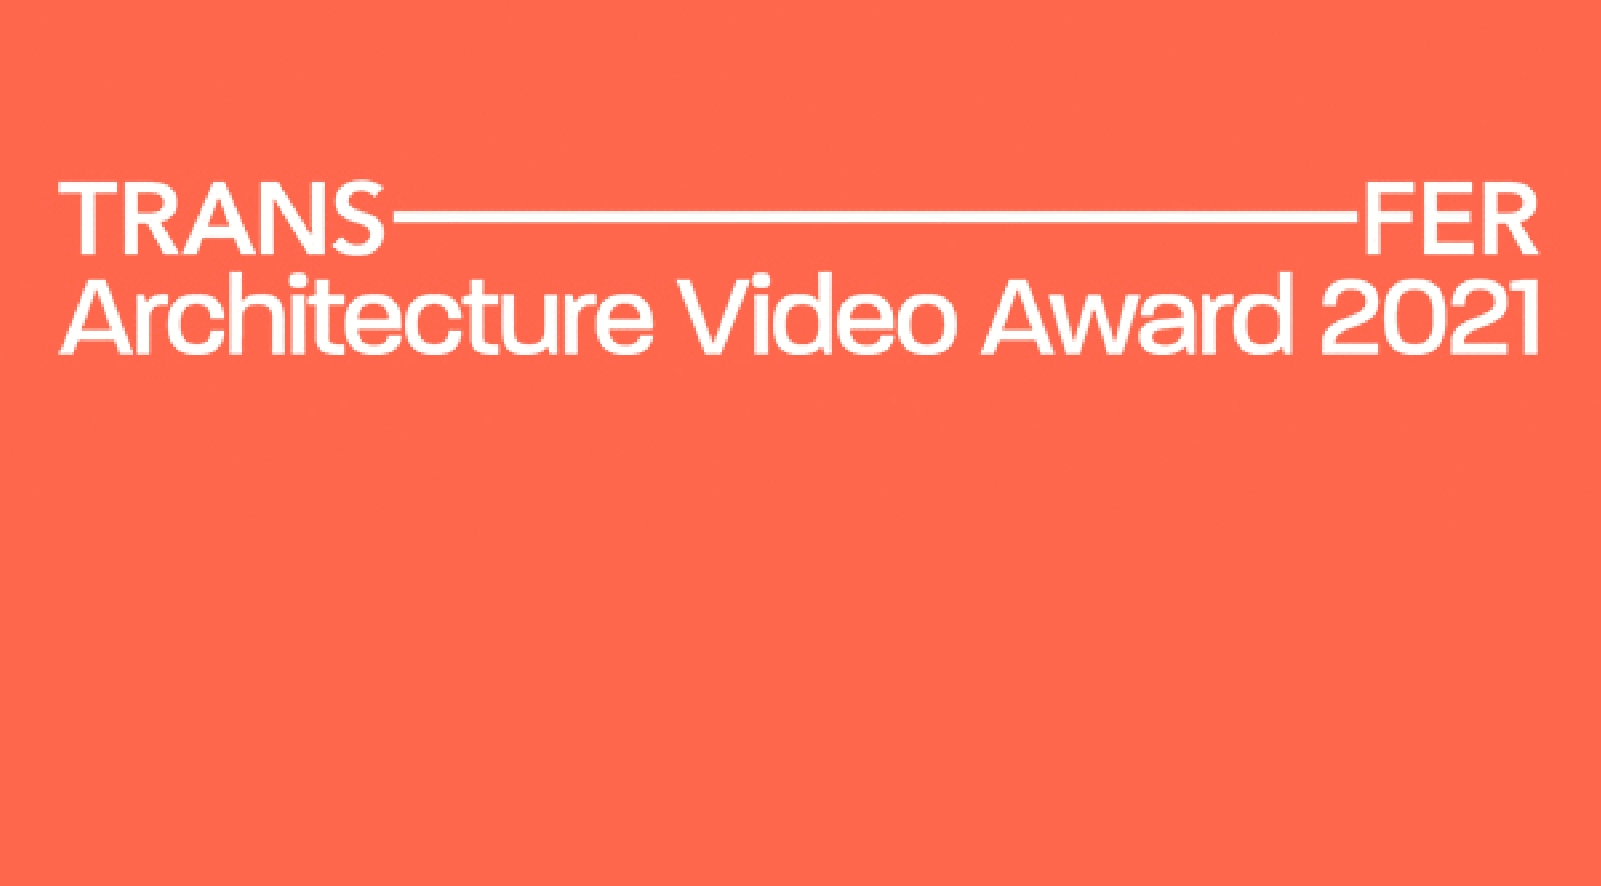 TRANSFER Architecture Video Award